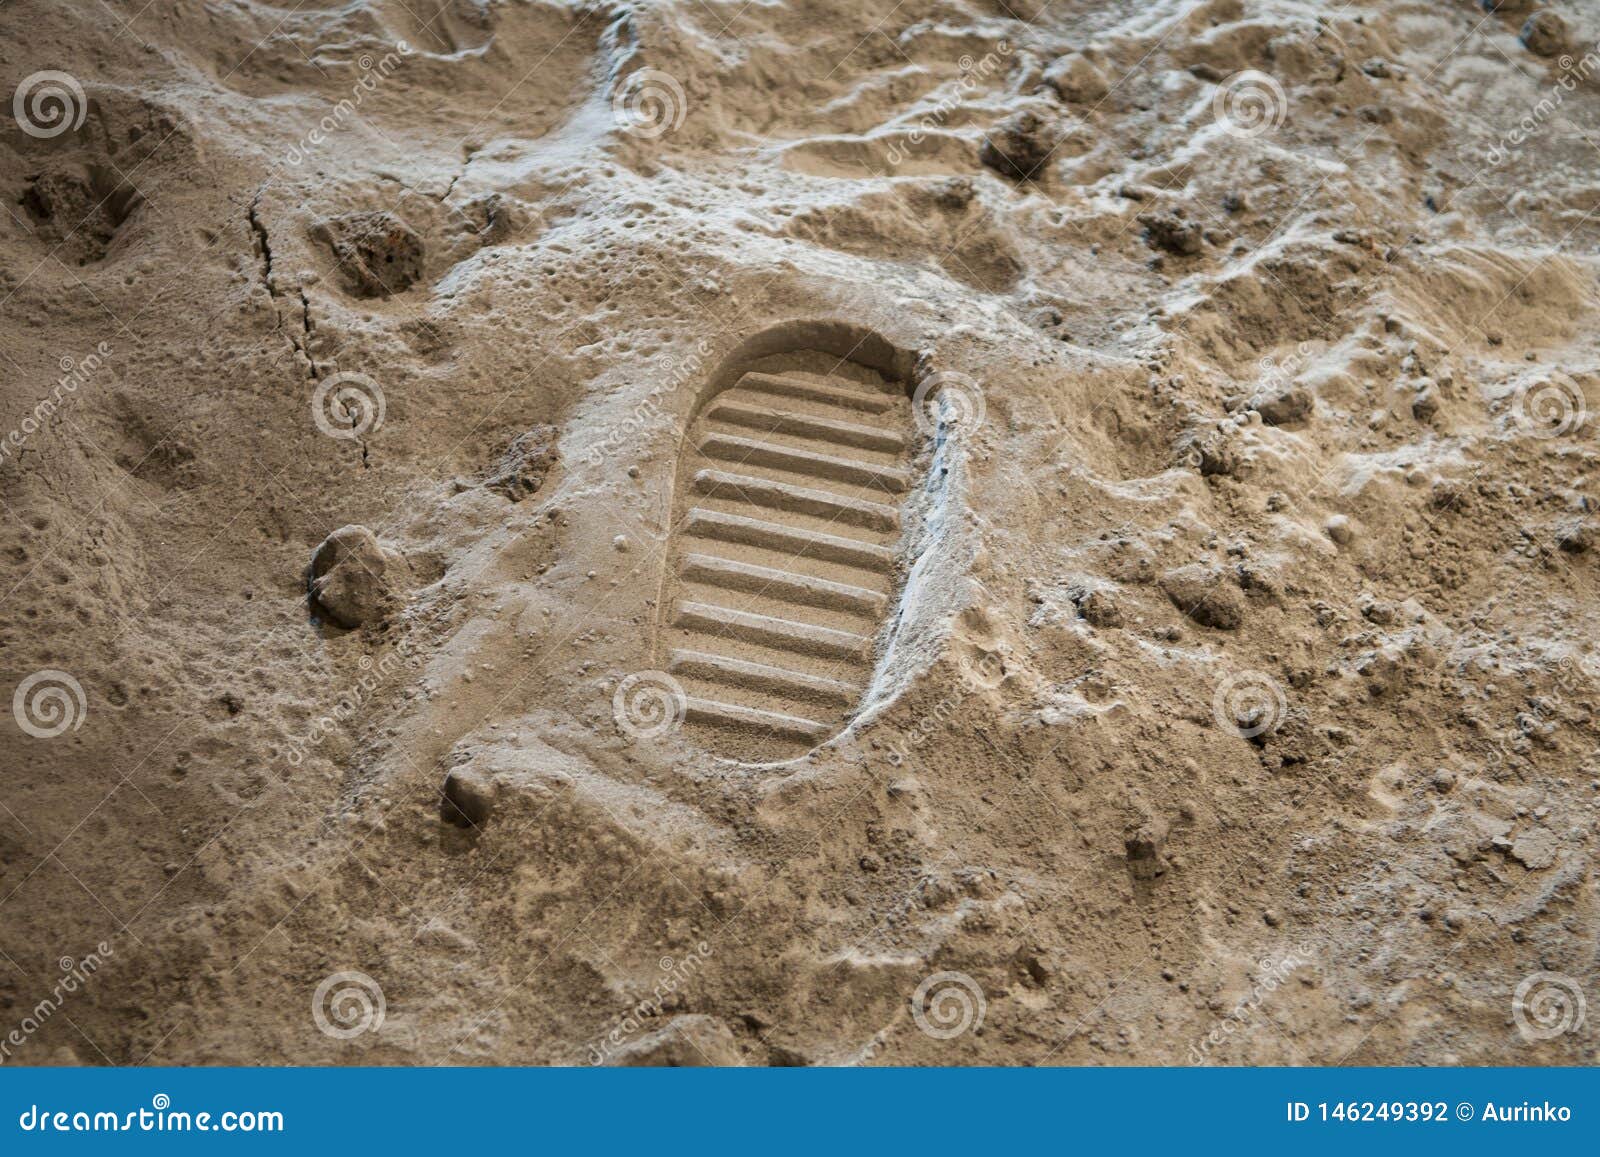 footprint on the moon surface